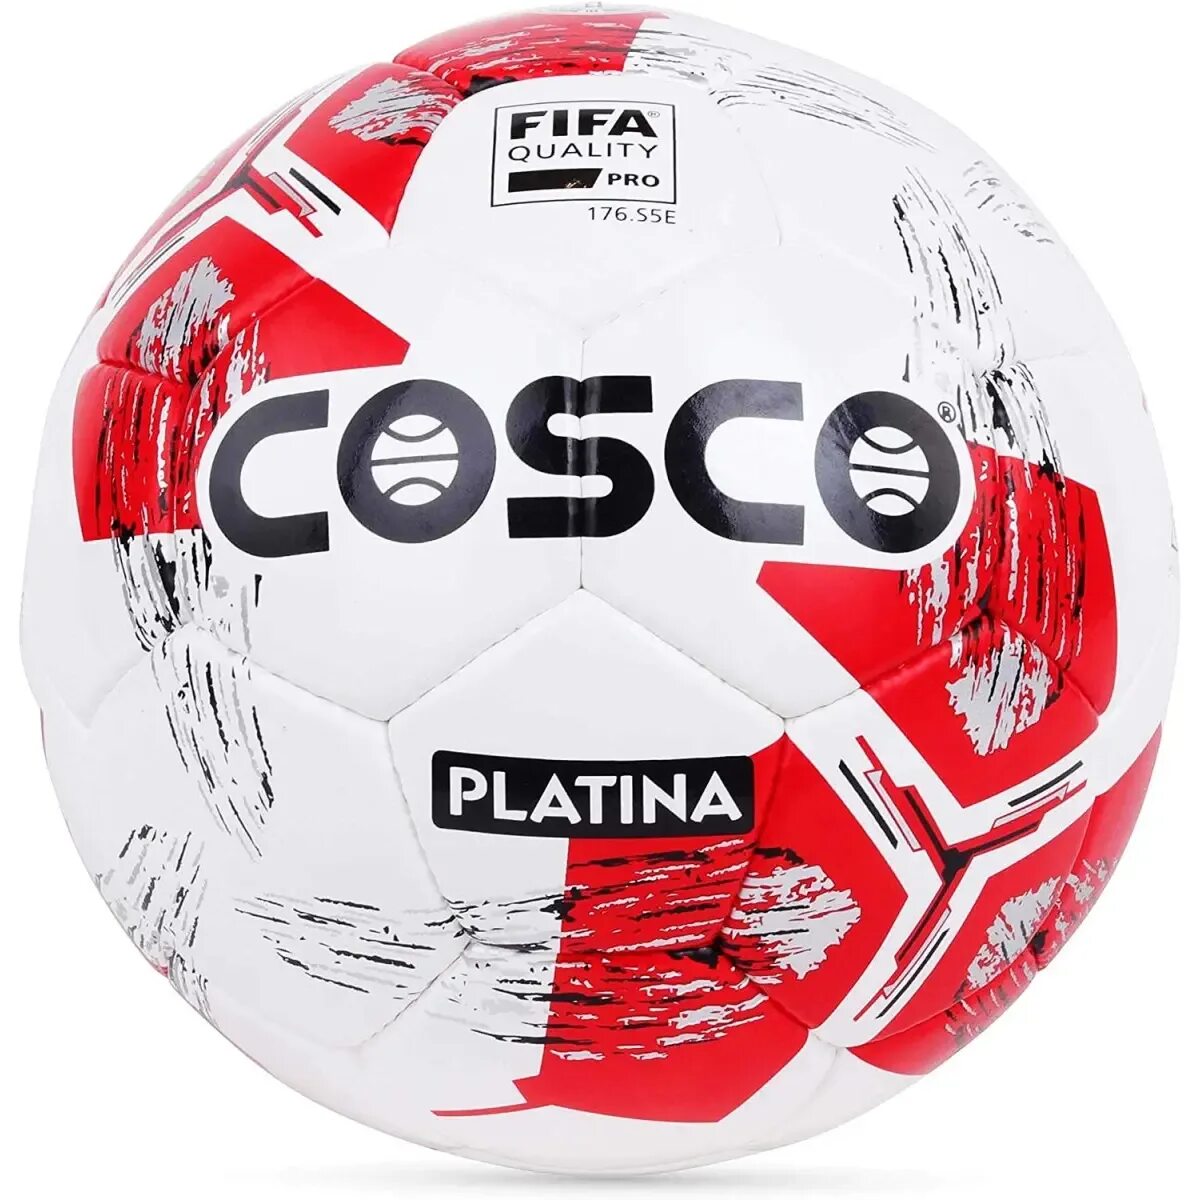 Cosco мяч. Мяч FIFA quality Pro. Мячи с сертификатами FIFA quality. Мяч ФИФА quality Pro 2018 Russia adidas.